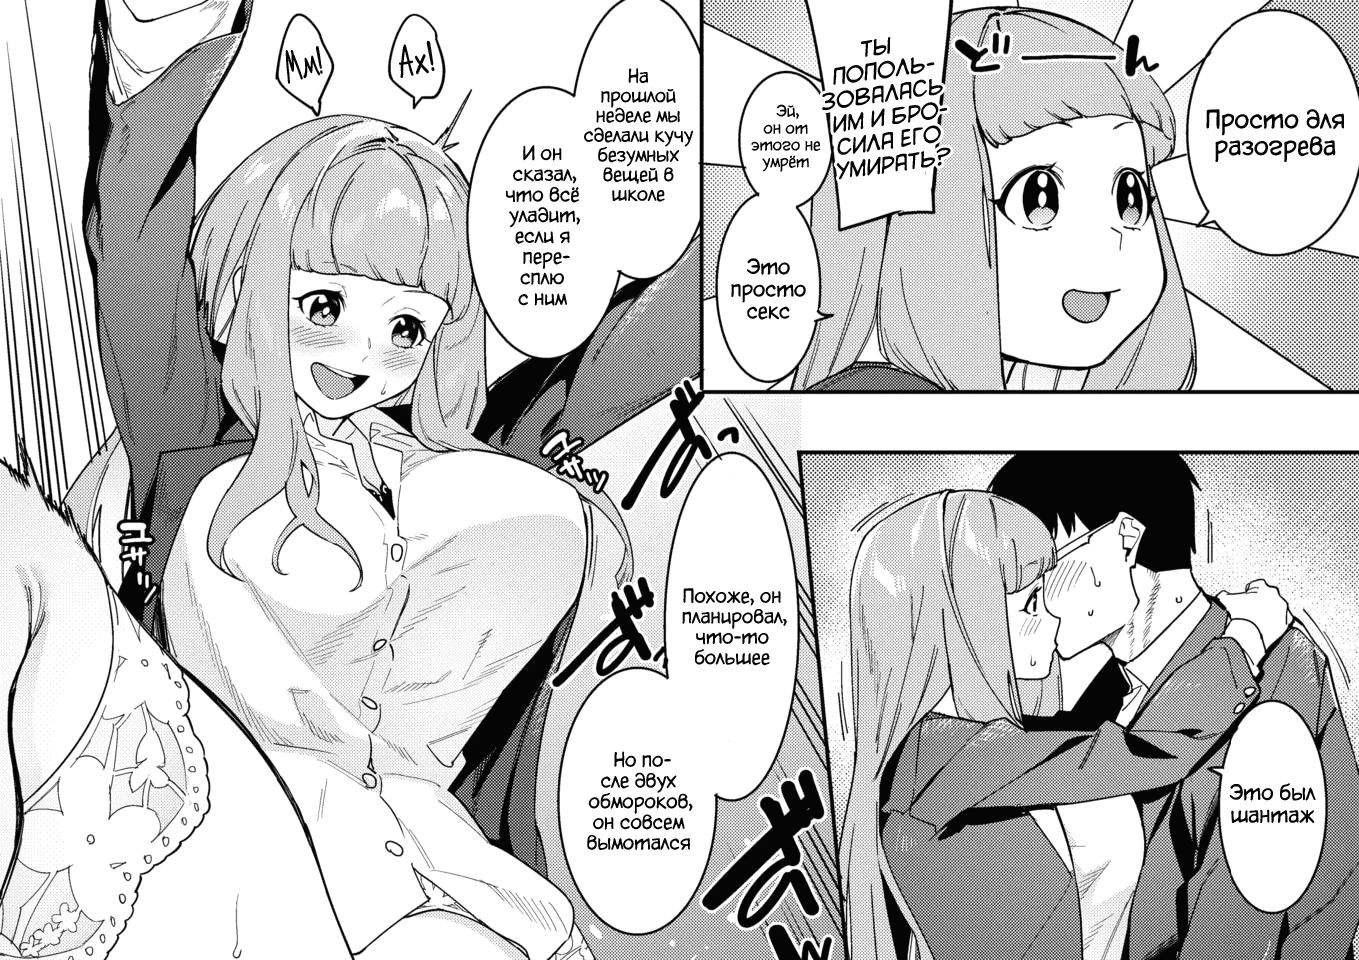 A couple of funny fragments from the manga (part 40) - NSFW, Manga, Hentai, Comedy, Sex, Sex Toys, Vibrator, Sperm, Nymphomaniac, Masturbation, Romance, Longpost